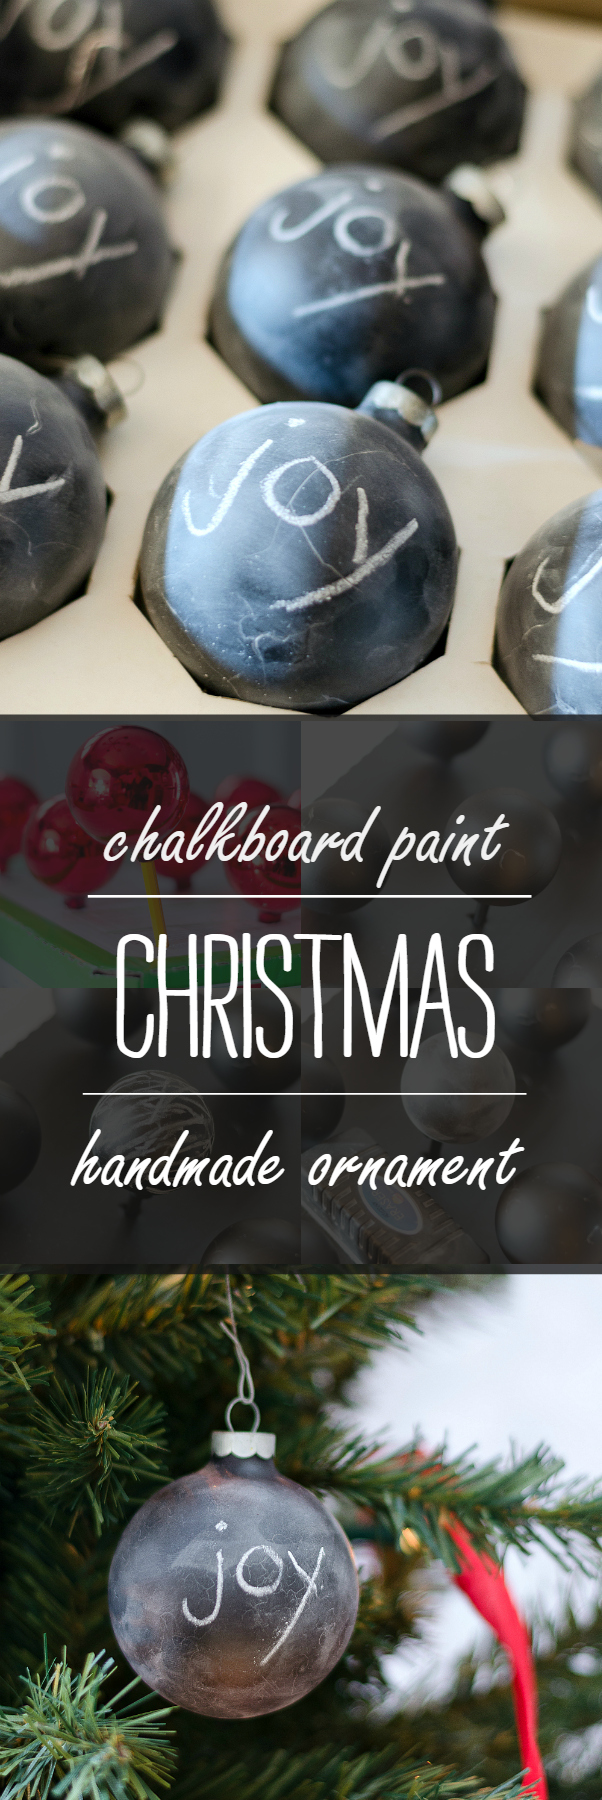 Handmade Ornament Ideas with Chalkboard Paint